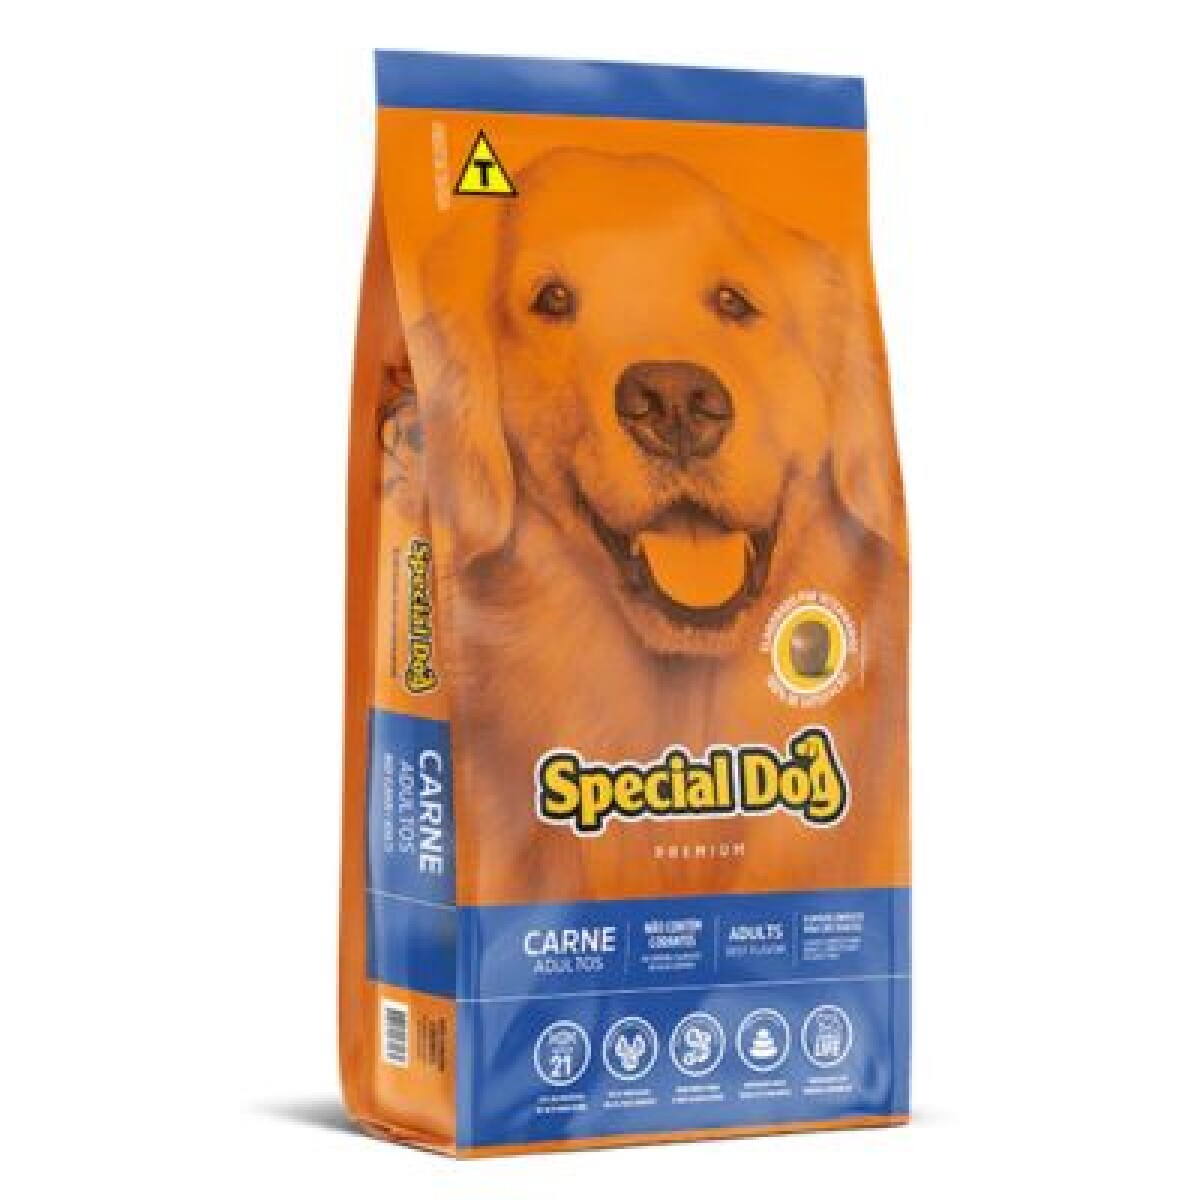 SPECIAL DOG CARNE ADULTO 1 KG - Unica 